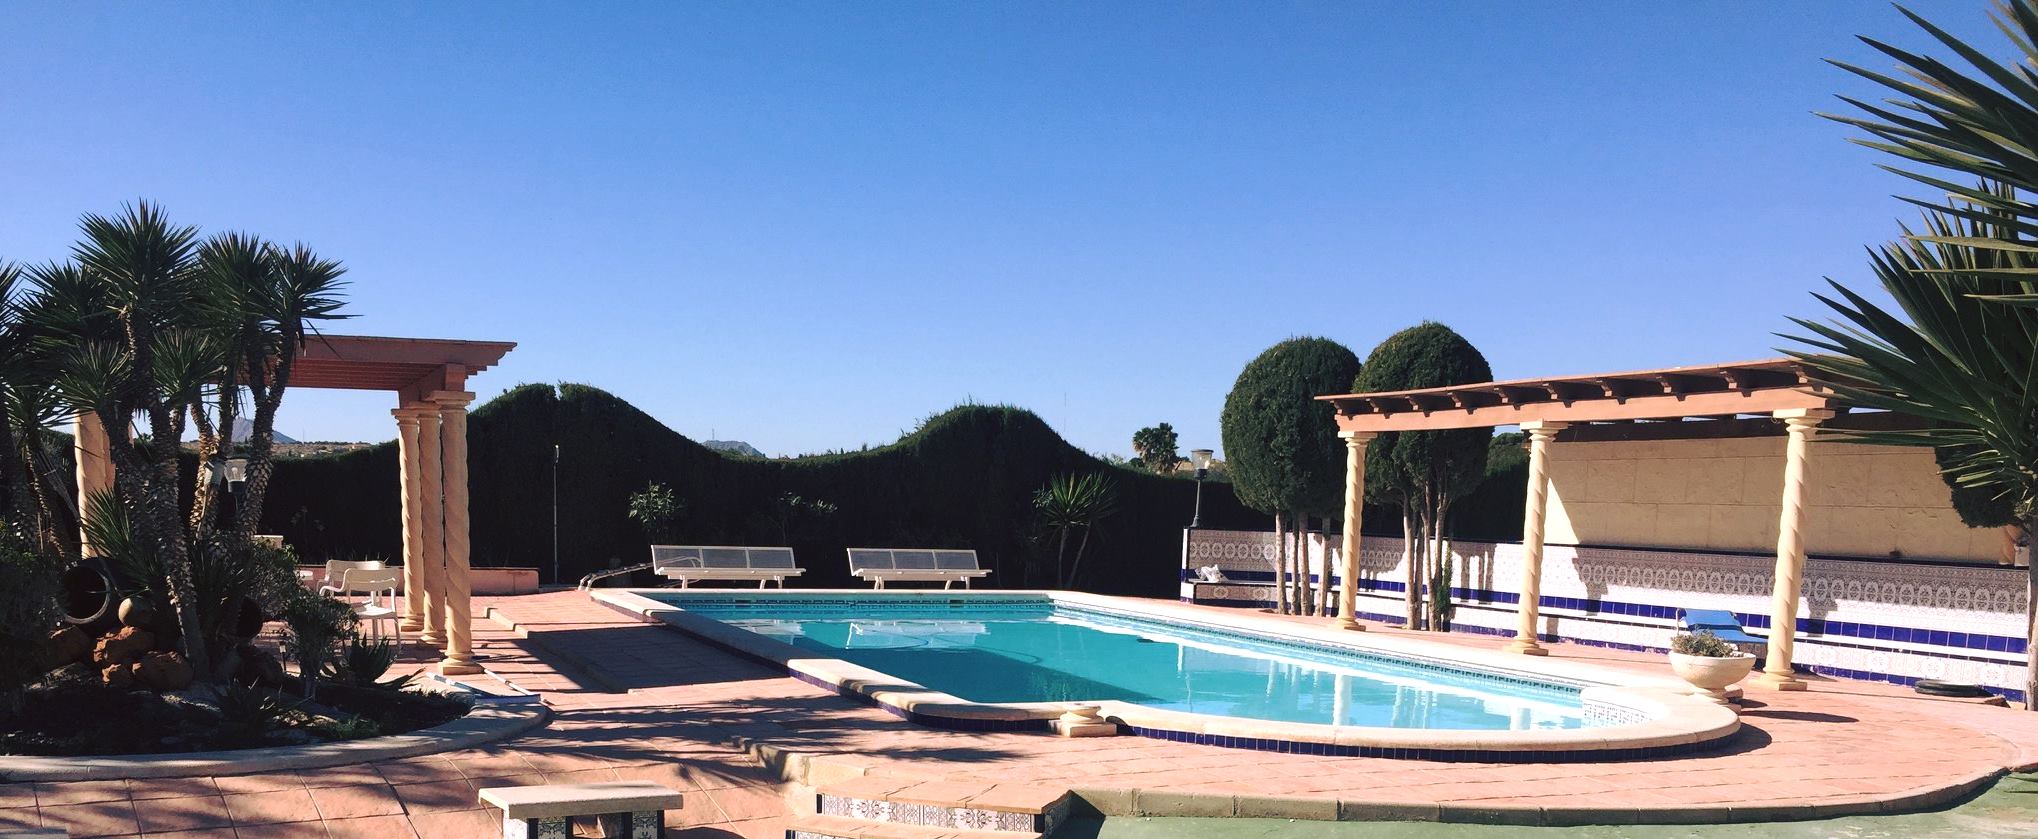 Piscine - acheter investissement immobilier avec piscine en espagne. Alicante. Costablanca